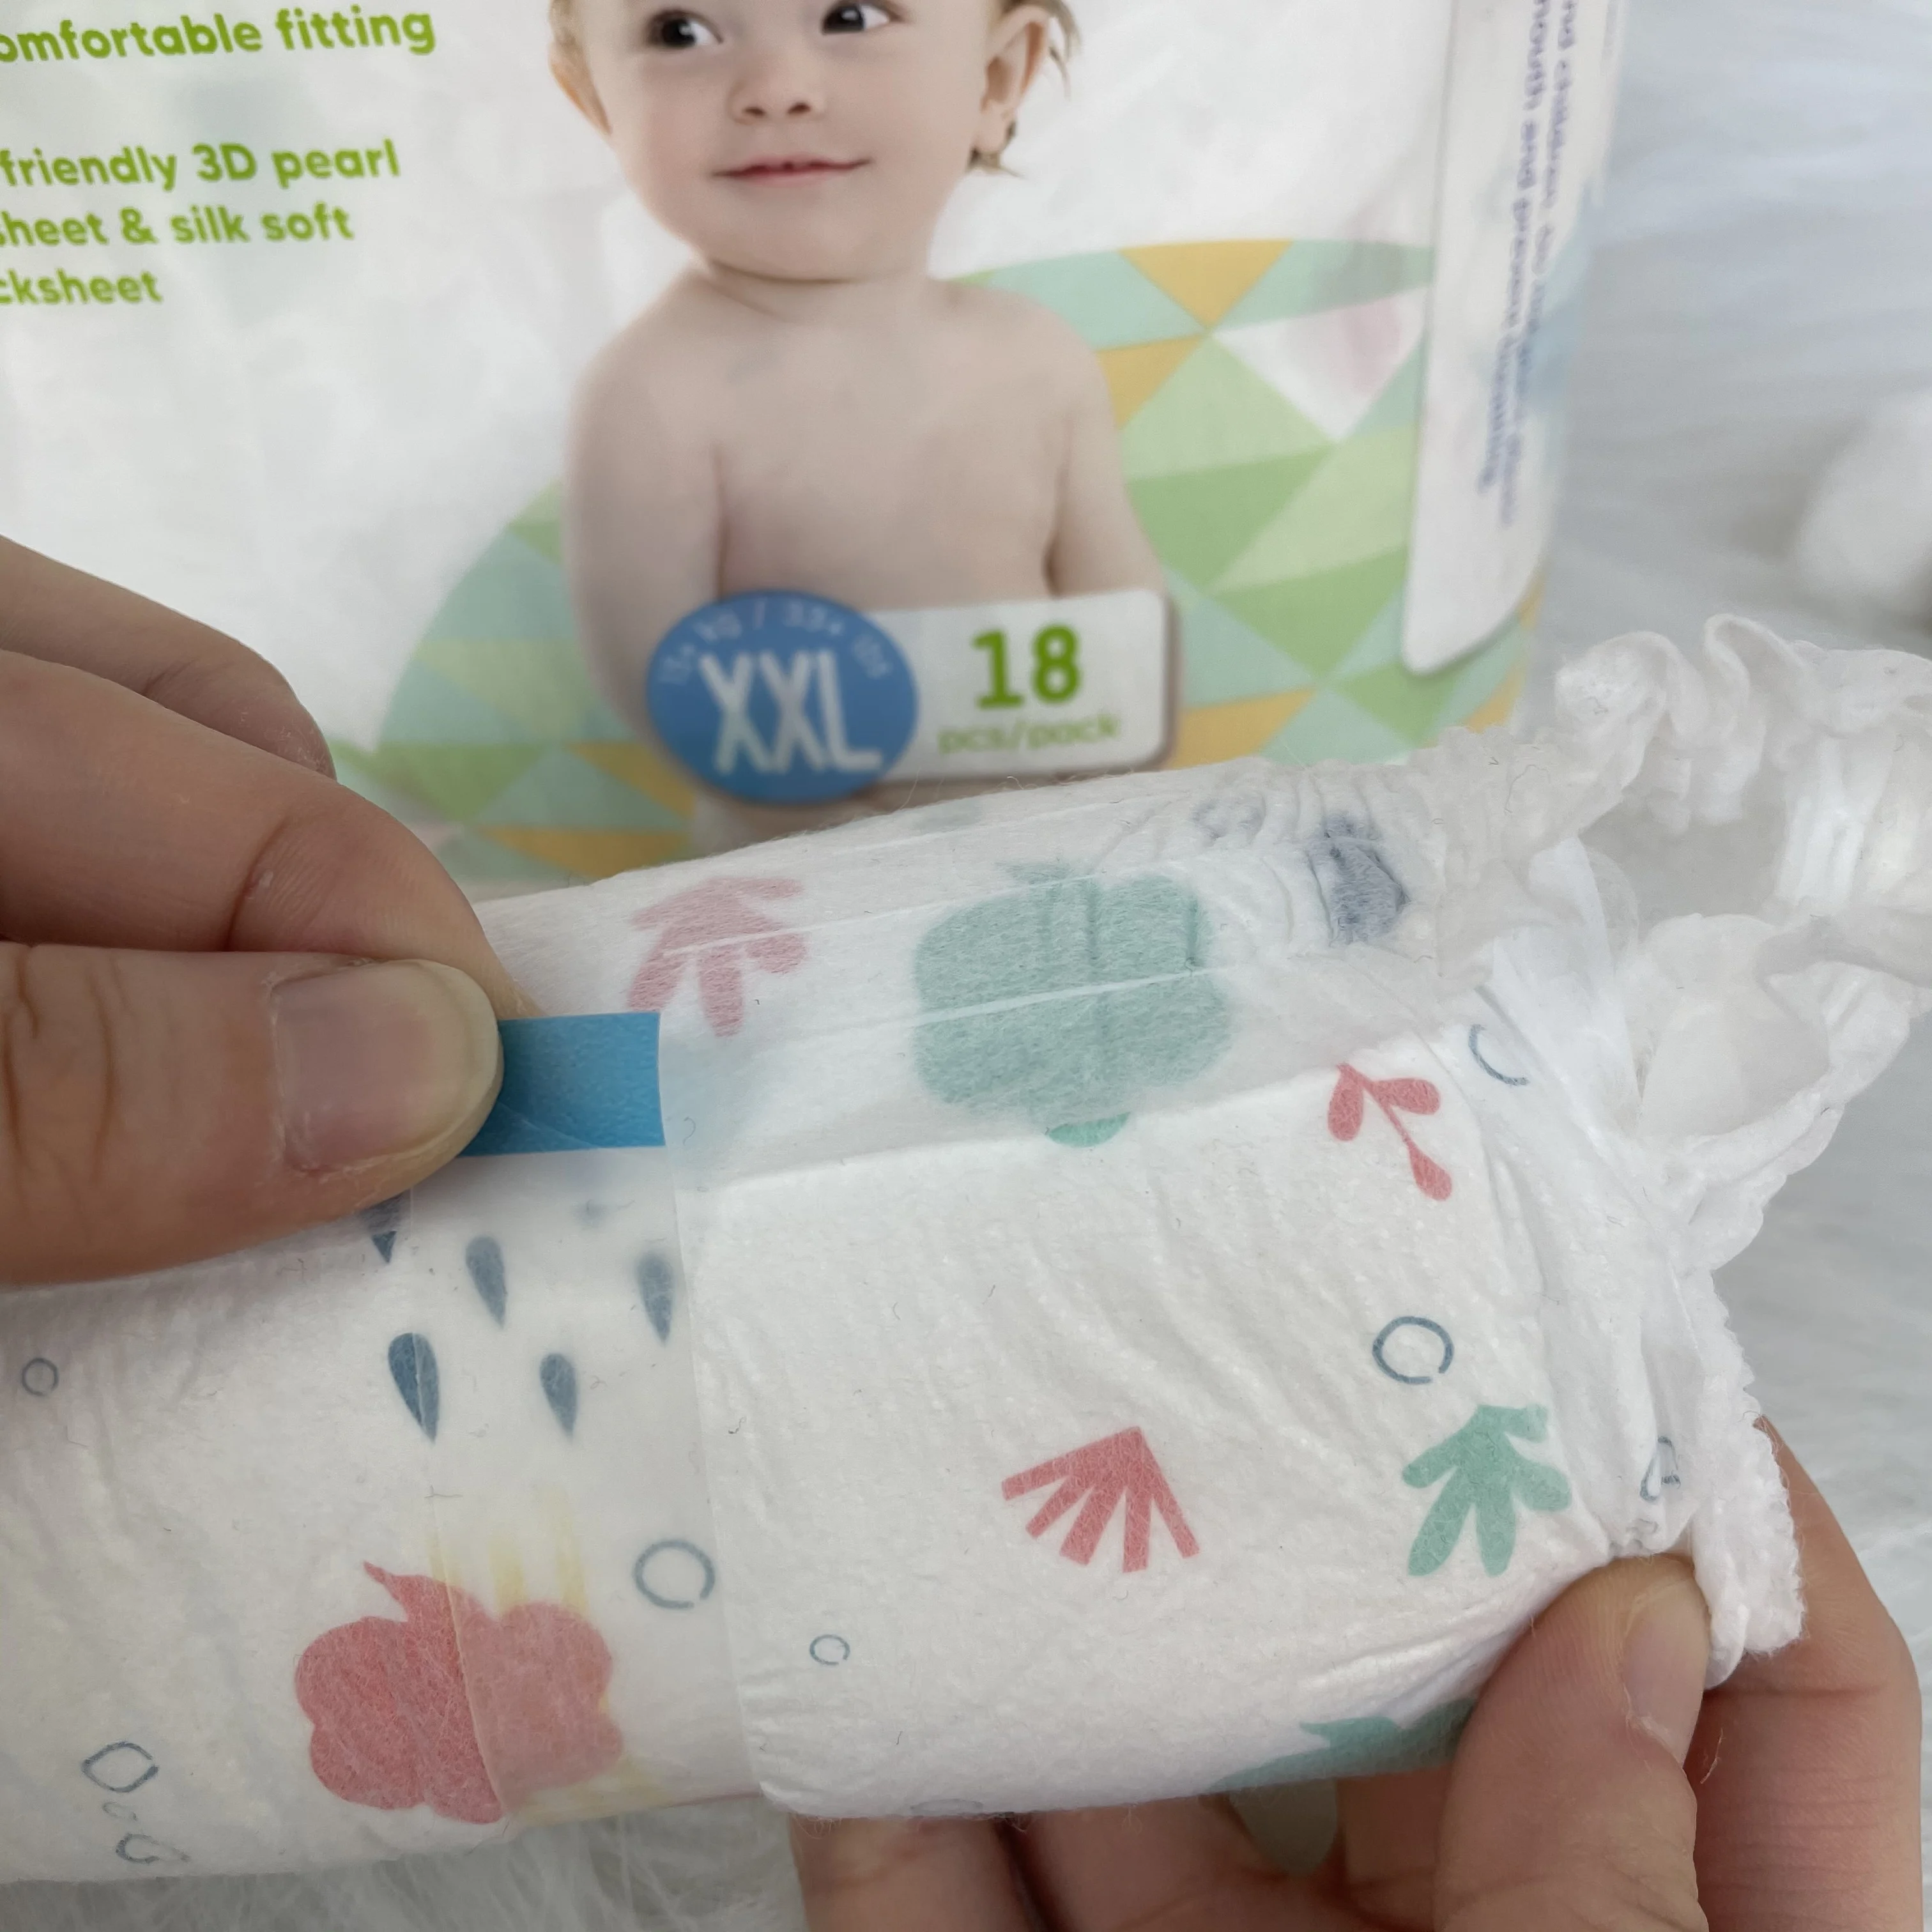 

besuper baby dyper pants diaper padded disposable diaper